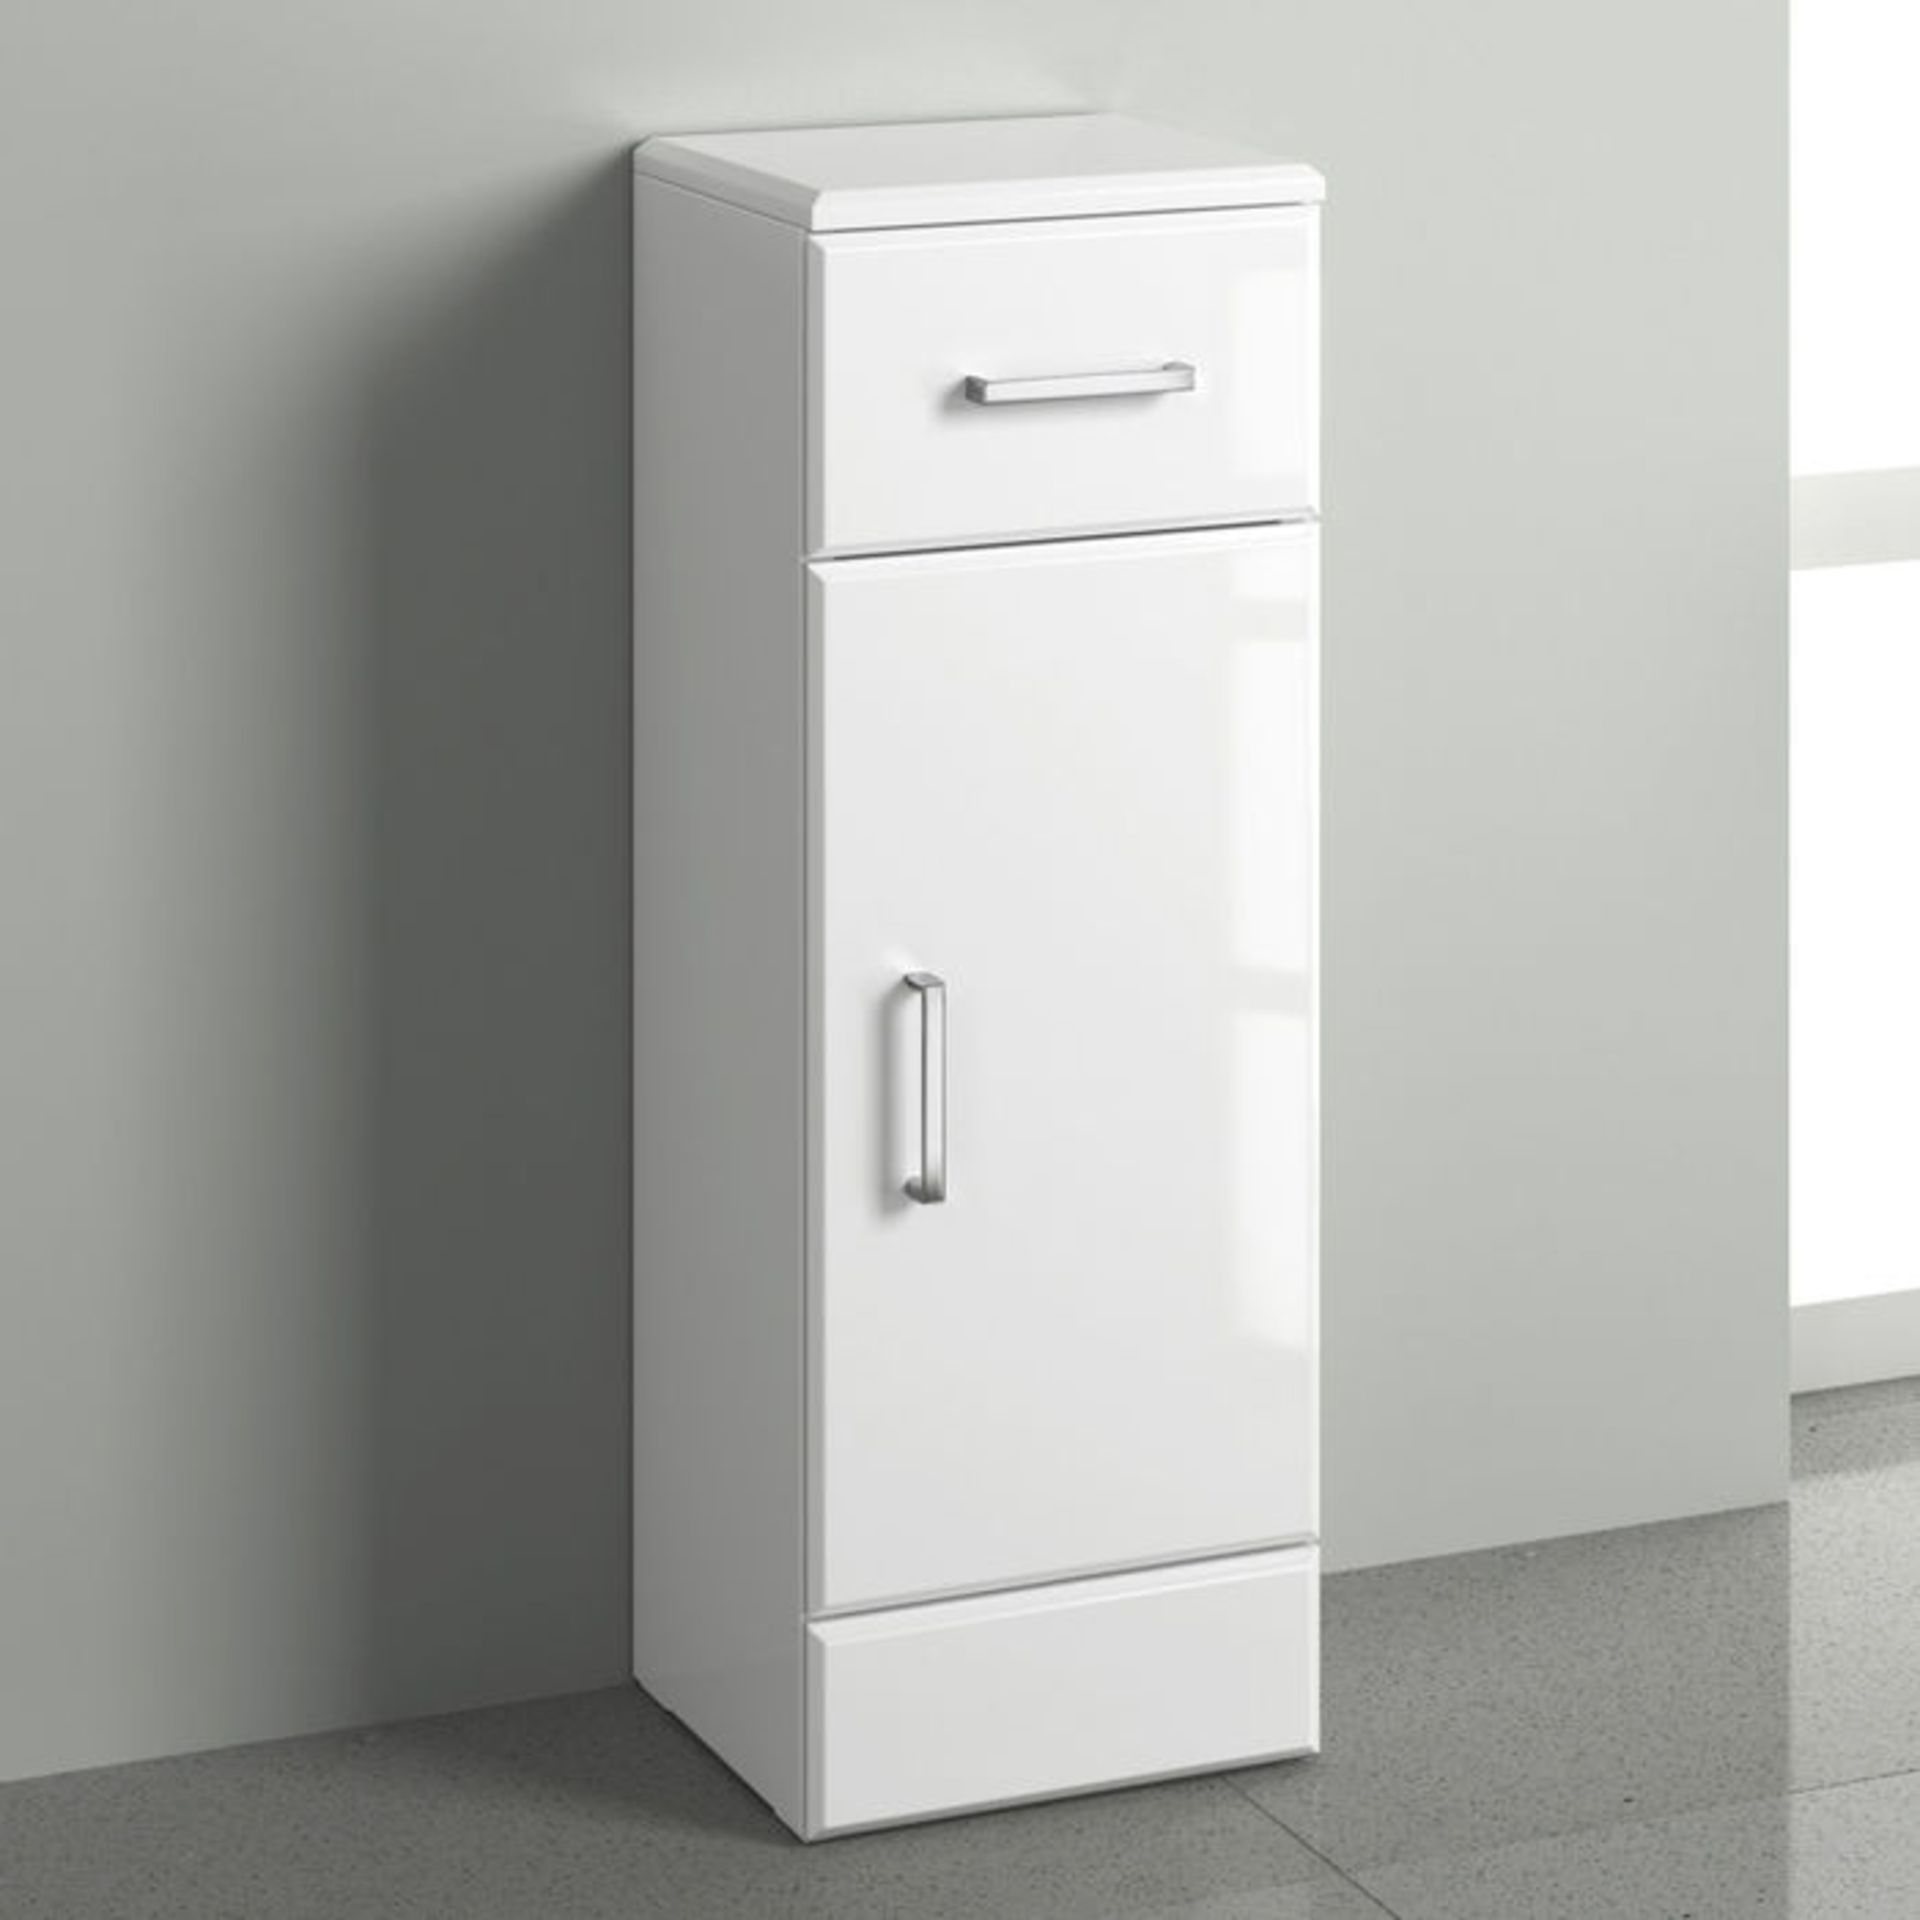 (SP42) 250x330mm Quartz Gloss White Small Side Cabinet Unit. RRP £125.99. Pristine gloss white - Image 2 of 5